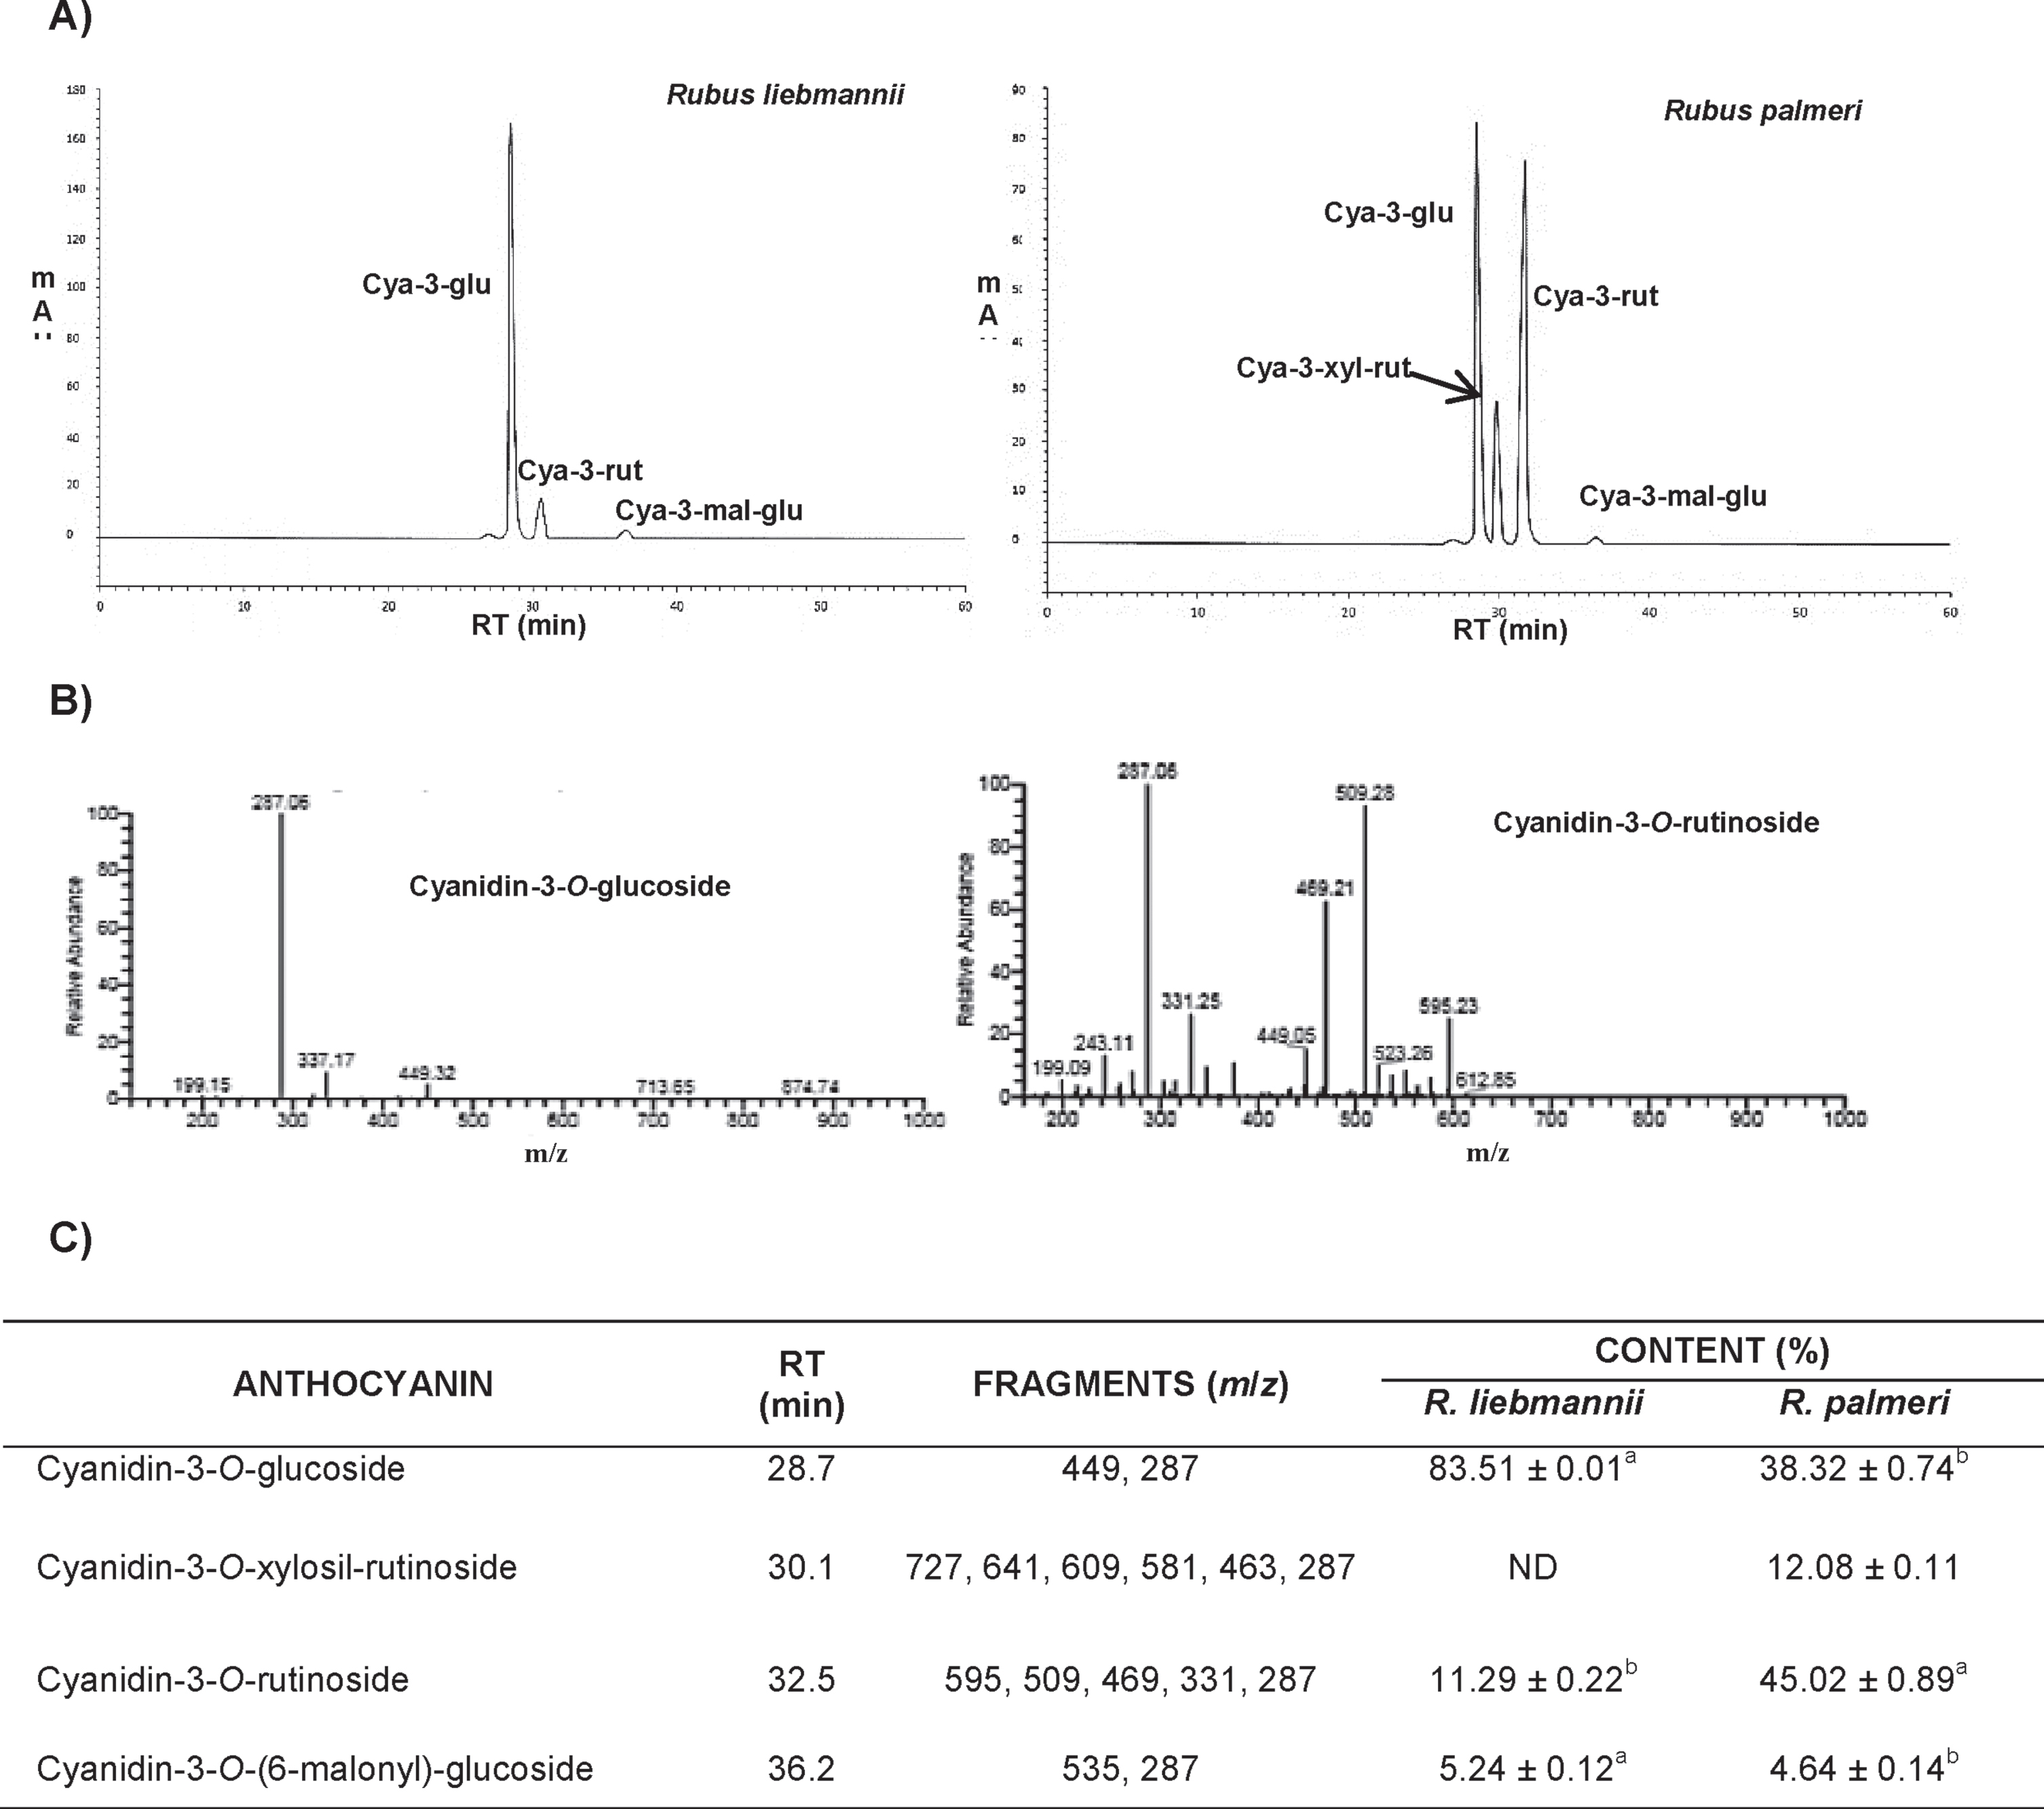 Anthocyanins profile in R. liebmannii and R. palmeri. A) Chromatograms of Rubus anthocyanins. B) Negative mode spectrogram of main anthocyanins in R. liebmannii and R. palmeri. C) Profile and negative ions of individual anthocyanins presented in fractions of R. l iebmannii and R. palmeri; Cya-3-glu: cyanidin-3-O-glucoside; Cya-3-xyl: cyanidin-3-O-xylosil-rutinoside; Cya-3-rut: cyanidin-3-O-rutinoside; Cya-3-rut: cyanidin-3-O-rutinoside; Cya-3-mal-glu: Cyanidin-3-O-(6-malonyl)-glucoside.